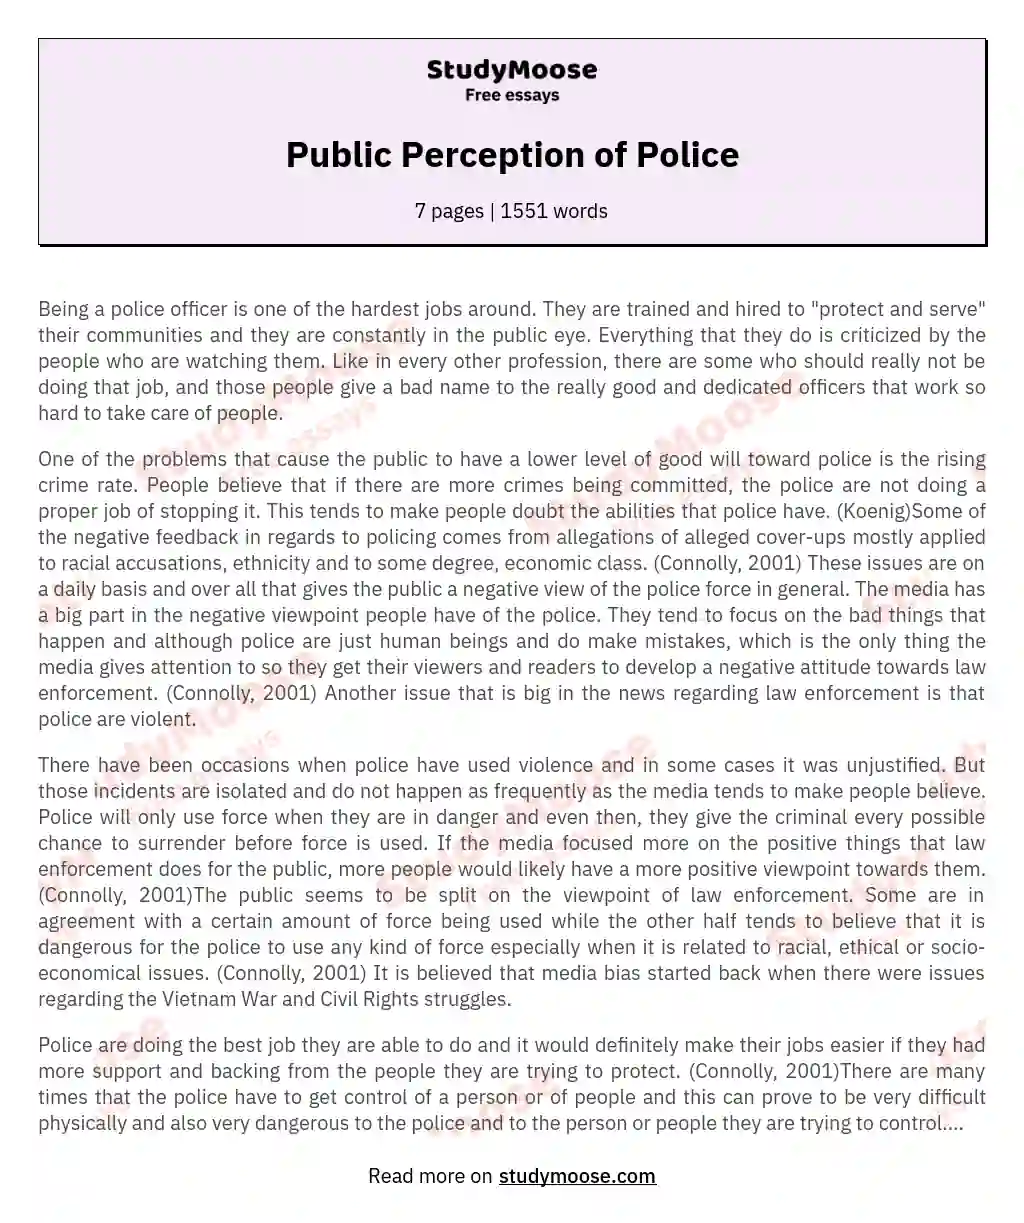 Public Perception of Police